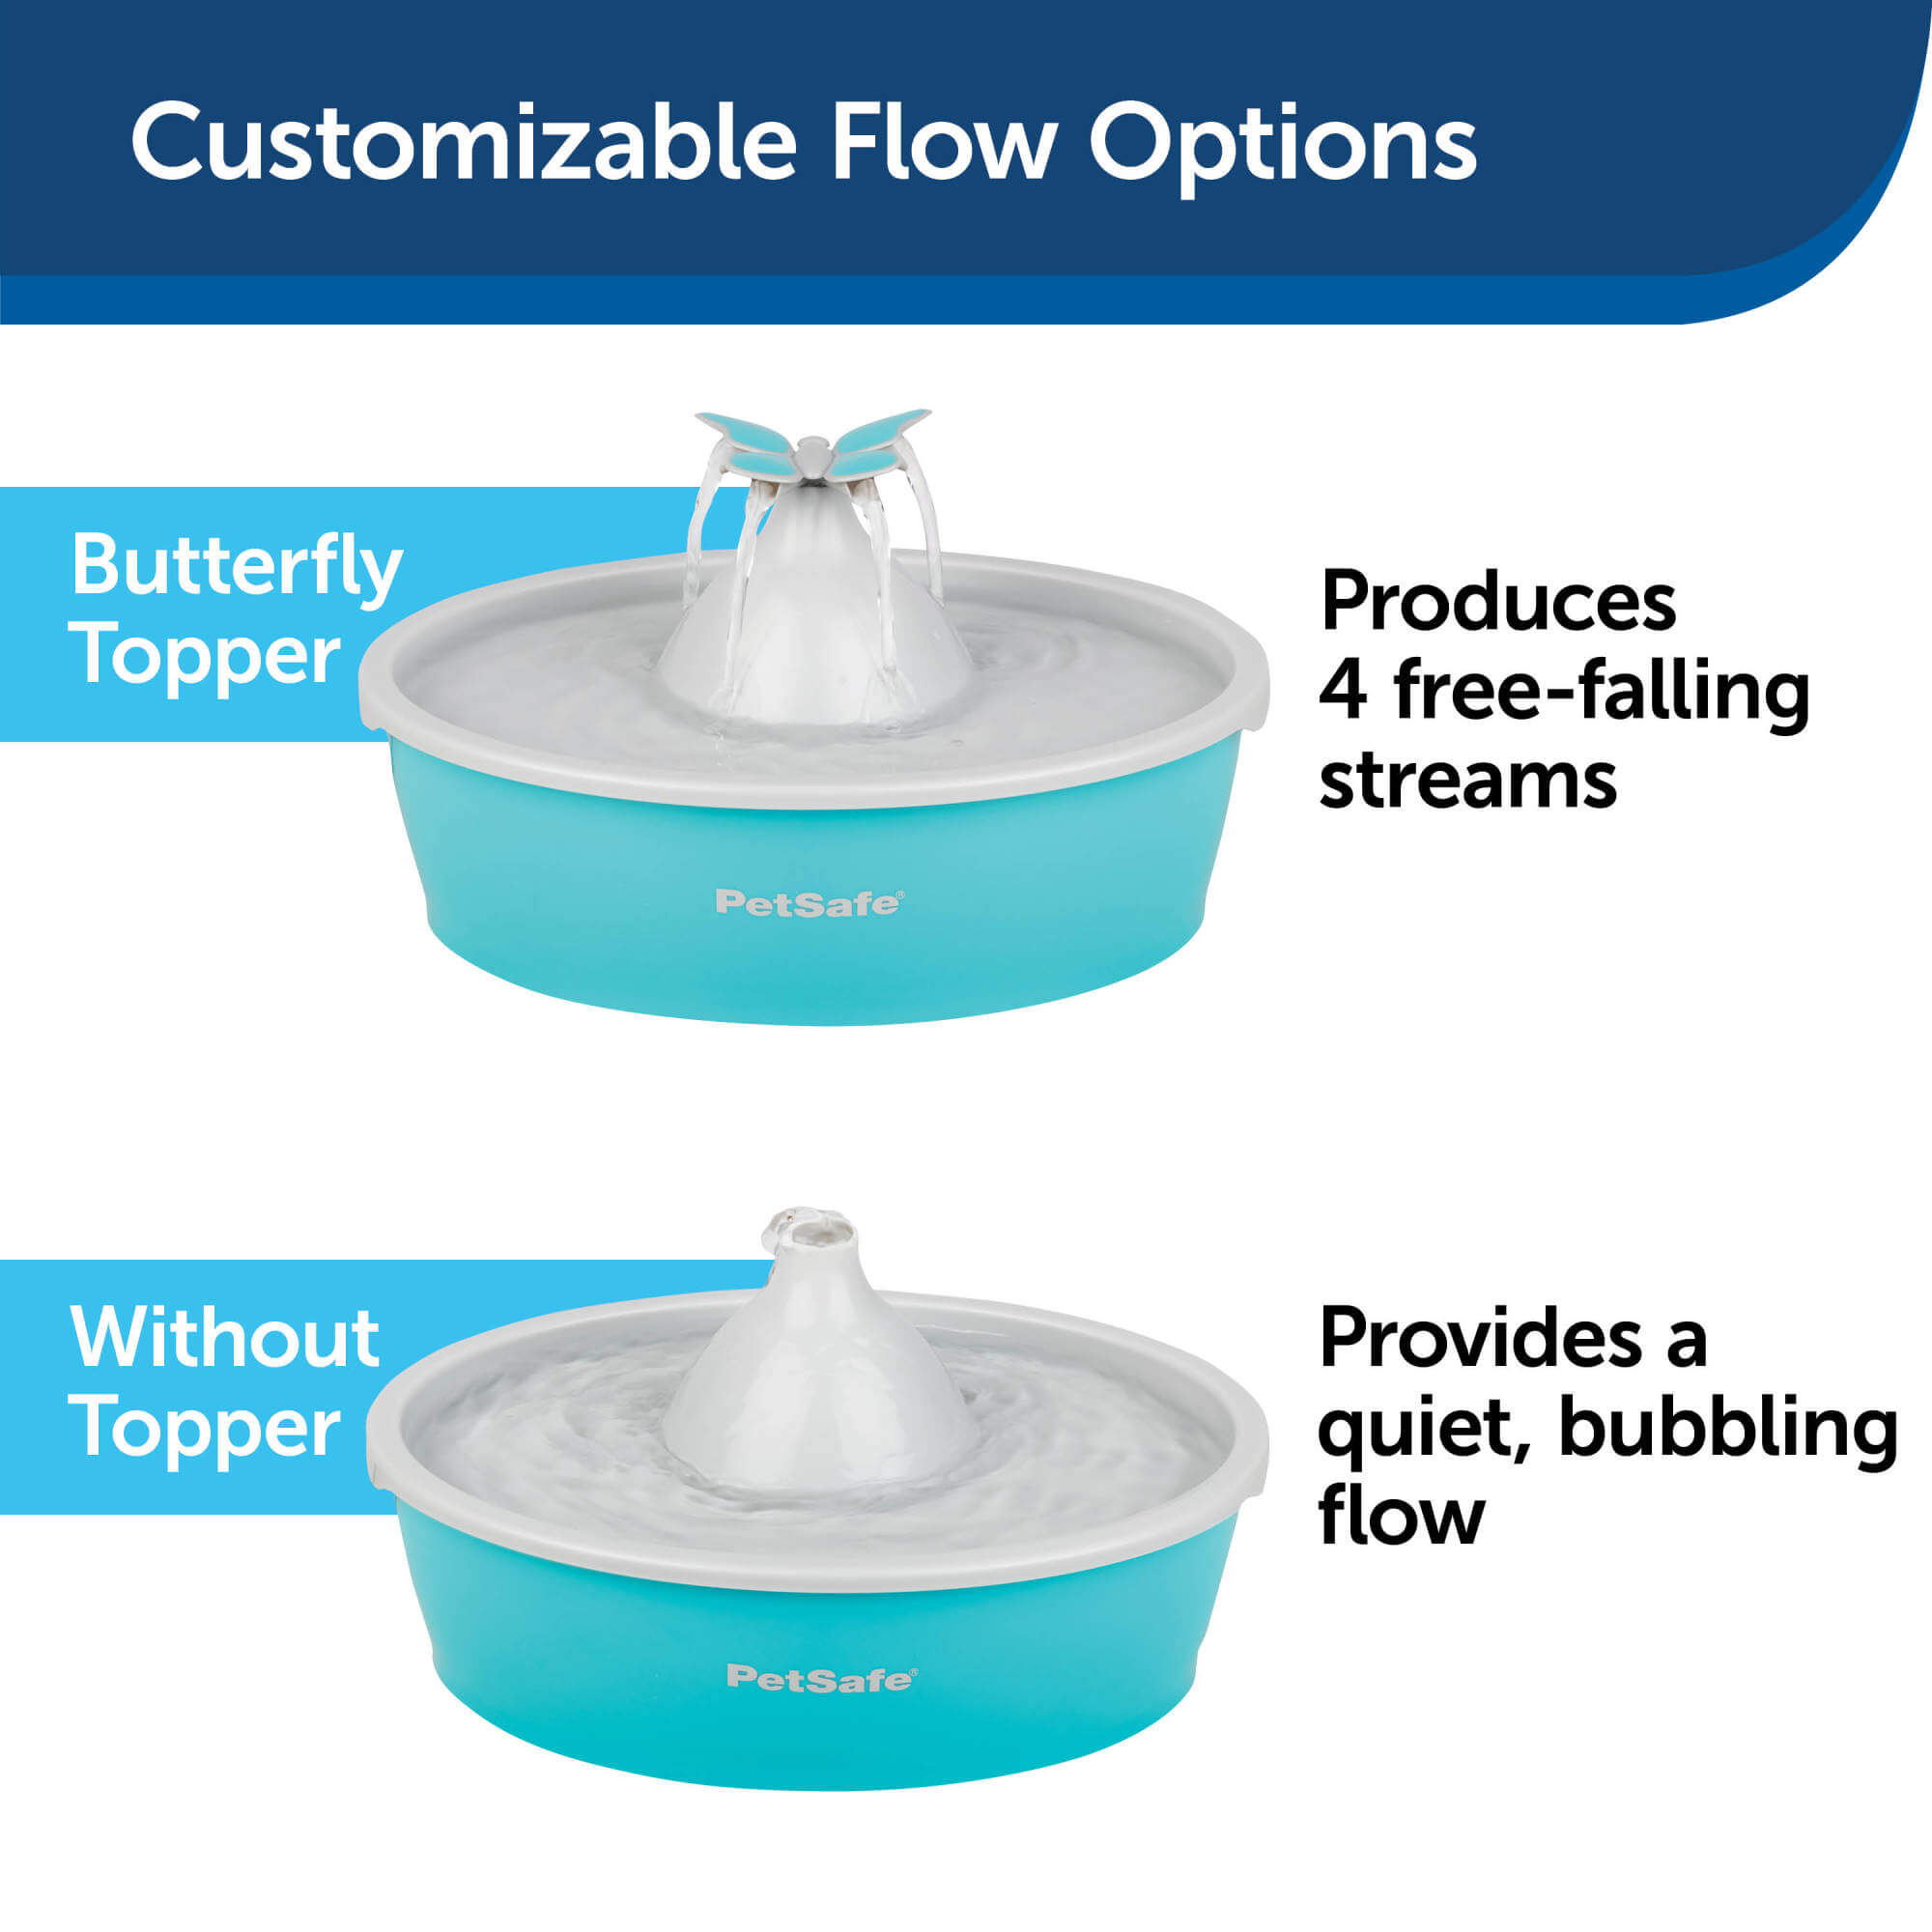 Customizable flow options